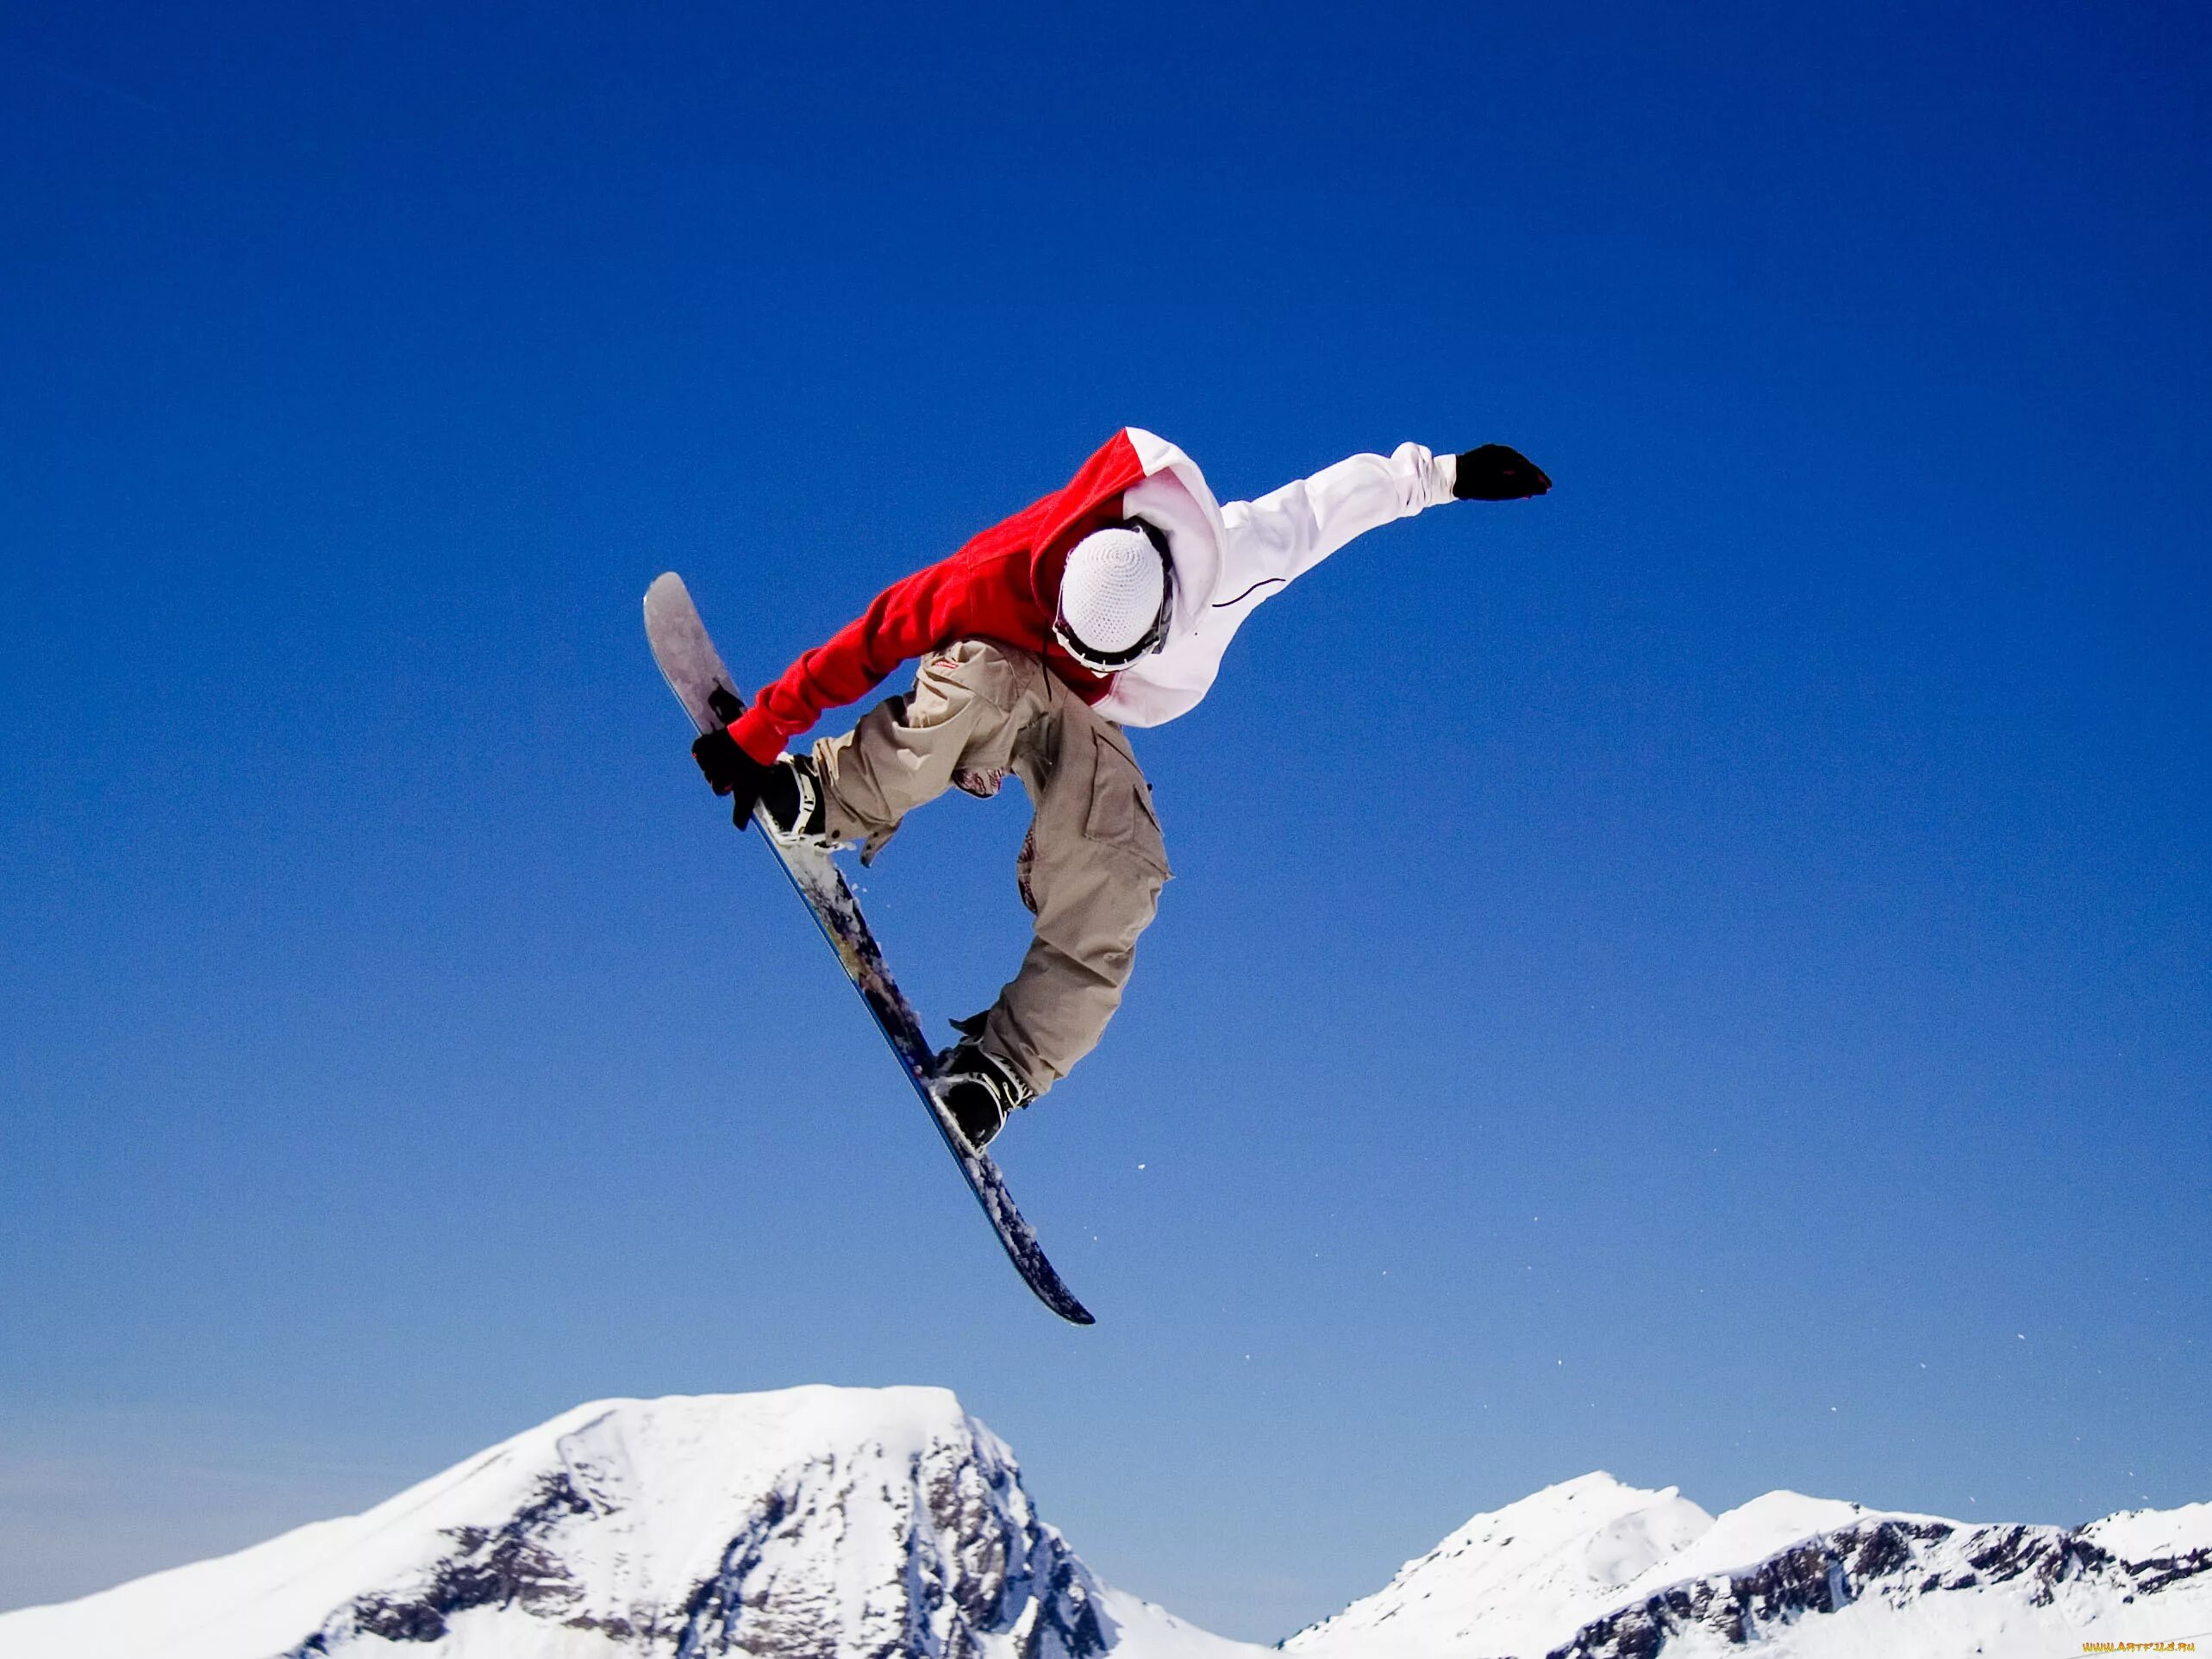 Фристайл сноуборд. Зимний спорт. Сноубординг-экстремальный вид спорта. Трюки на сноуборде. Go snowboarding